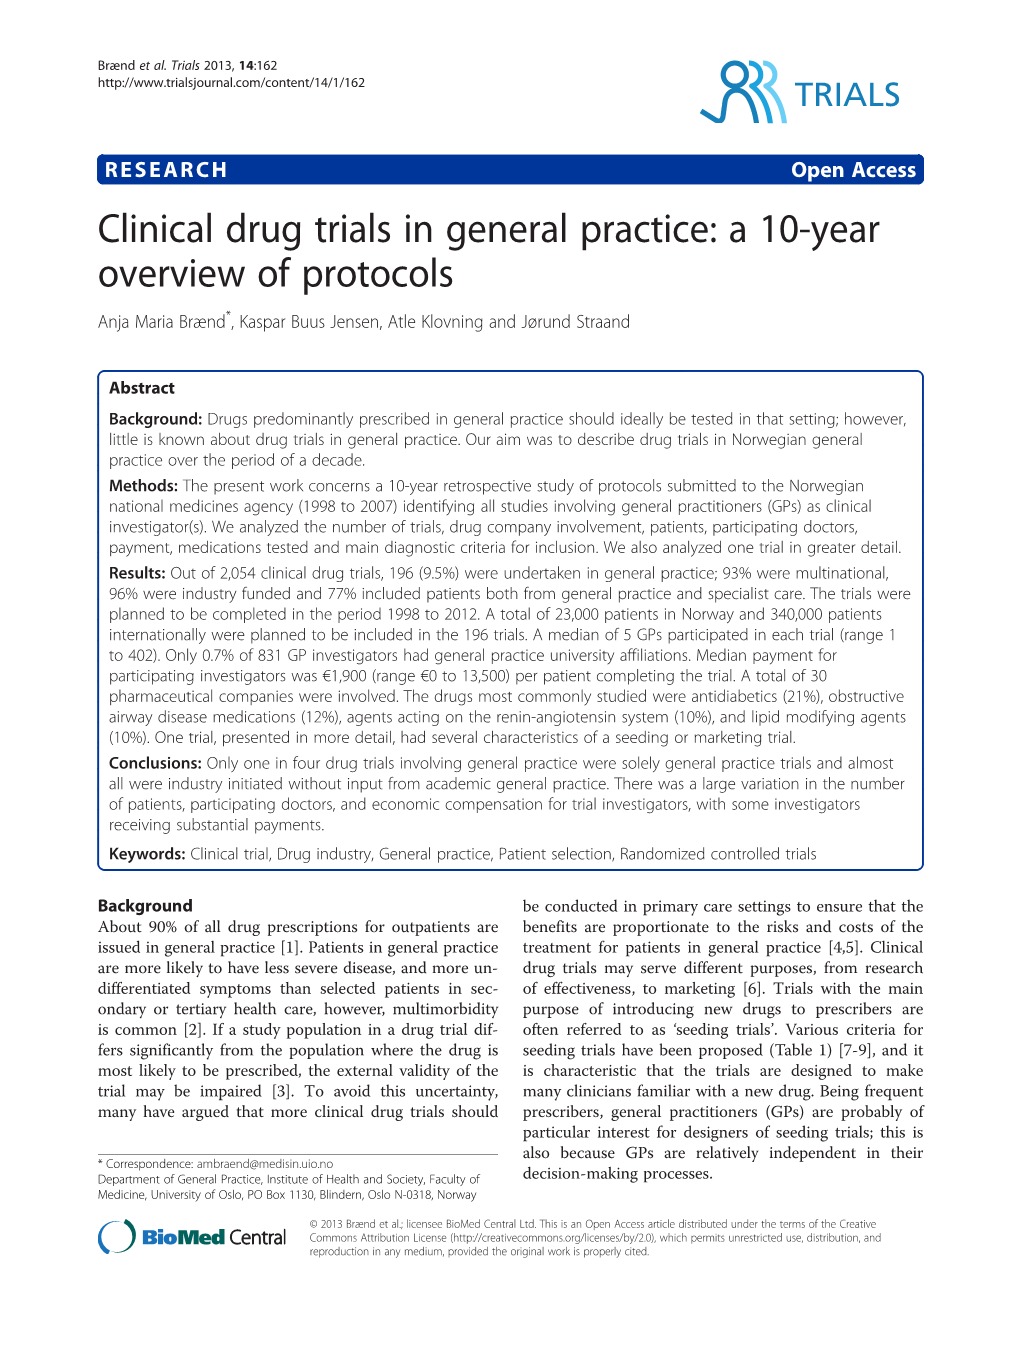 Clinical Drug Trials in General Practice: a 10-Year Overview of Protocols Anja Maria Brænd*, Kaspar Buus Jensen, Atle Klovning and Jørund Straand